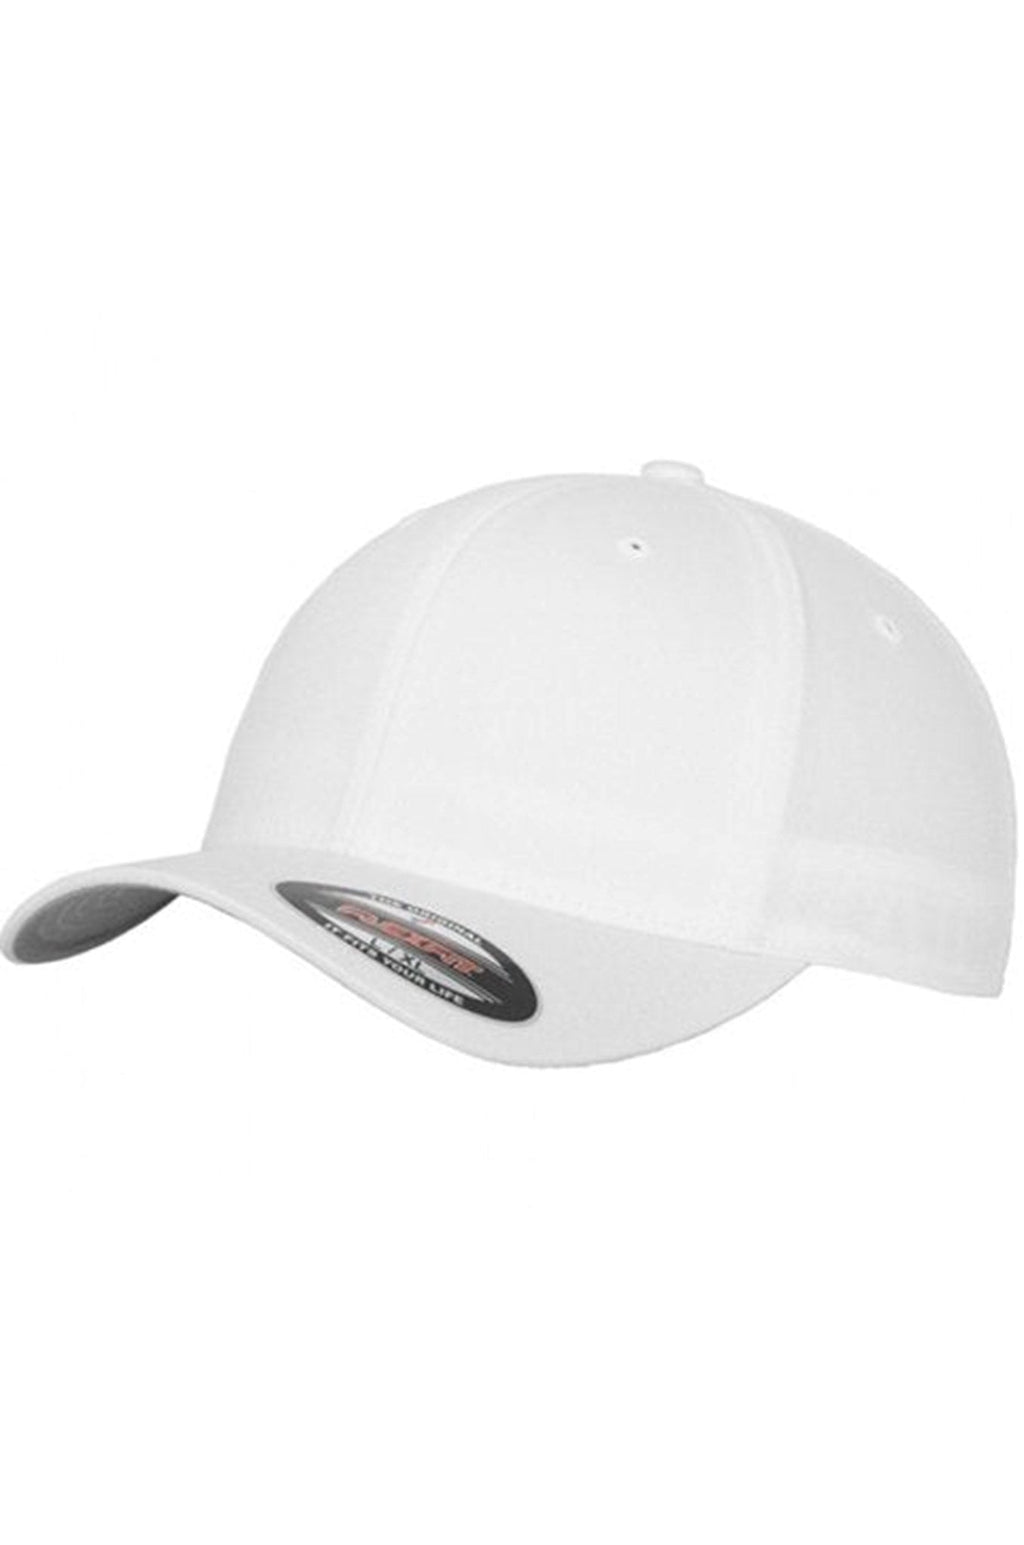 FlexFit原始棒球帽 - 白色